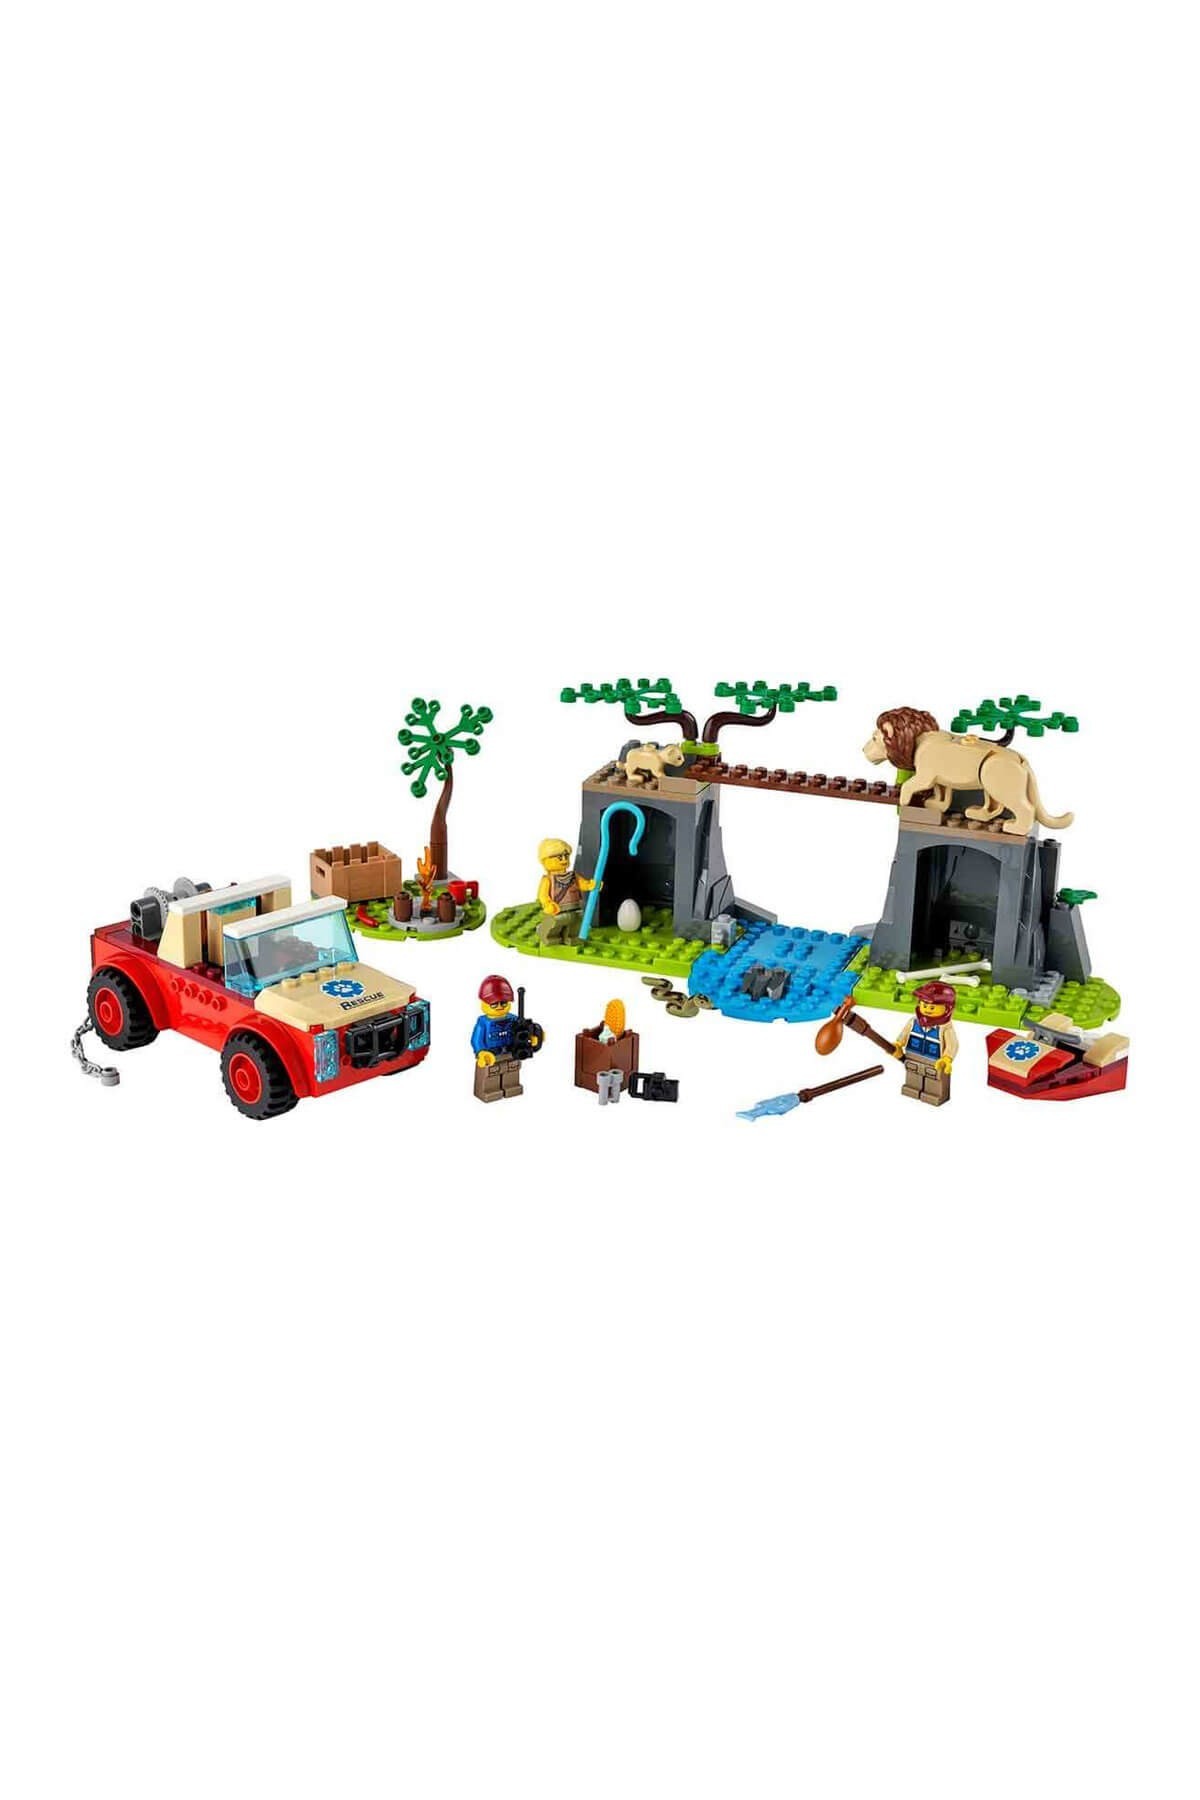 Lego City Wildlife Rescue Off Roader 60301